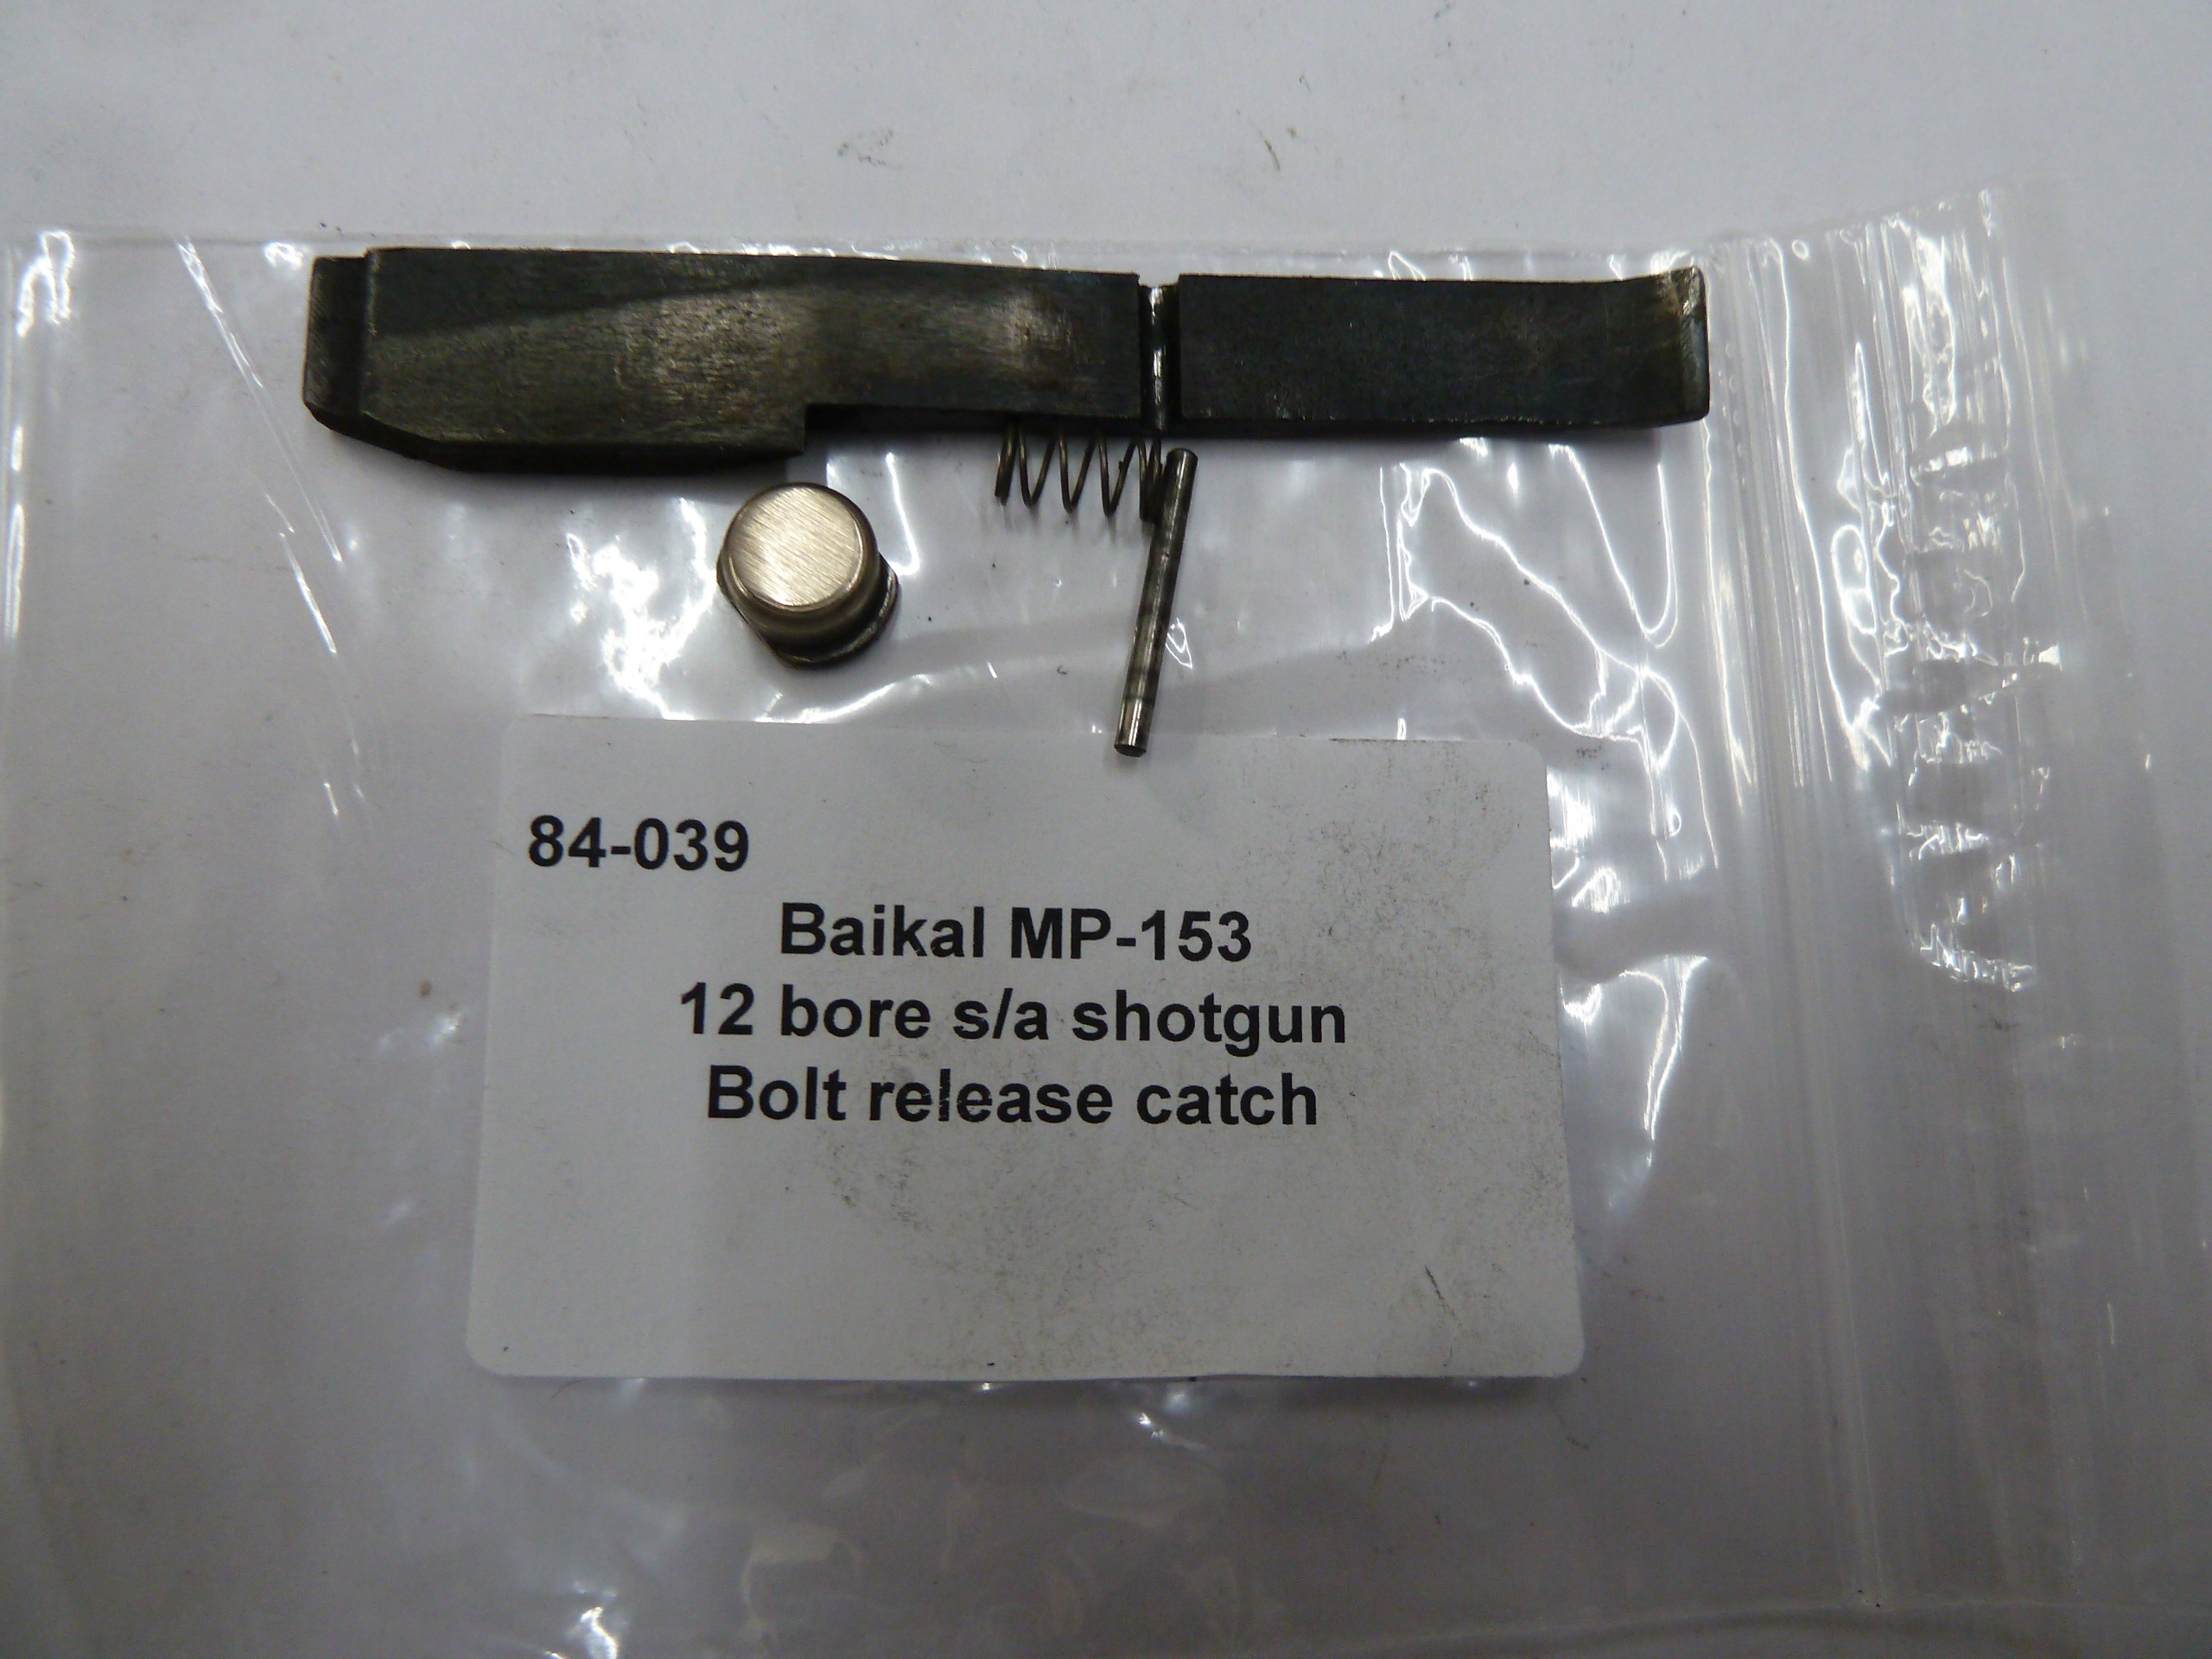 Baikal MP-153 bolt release catch